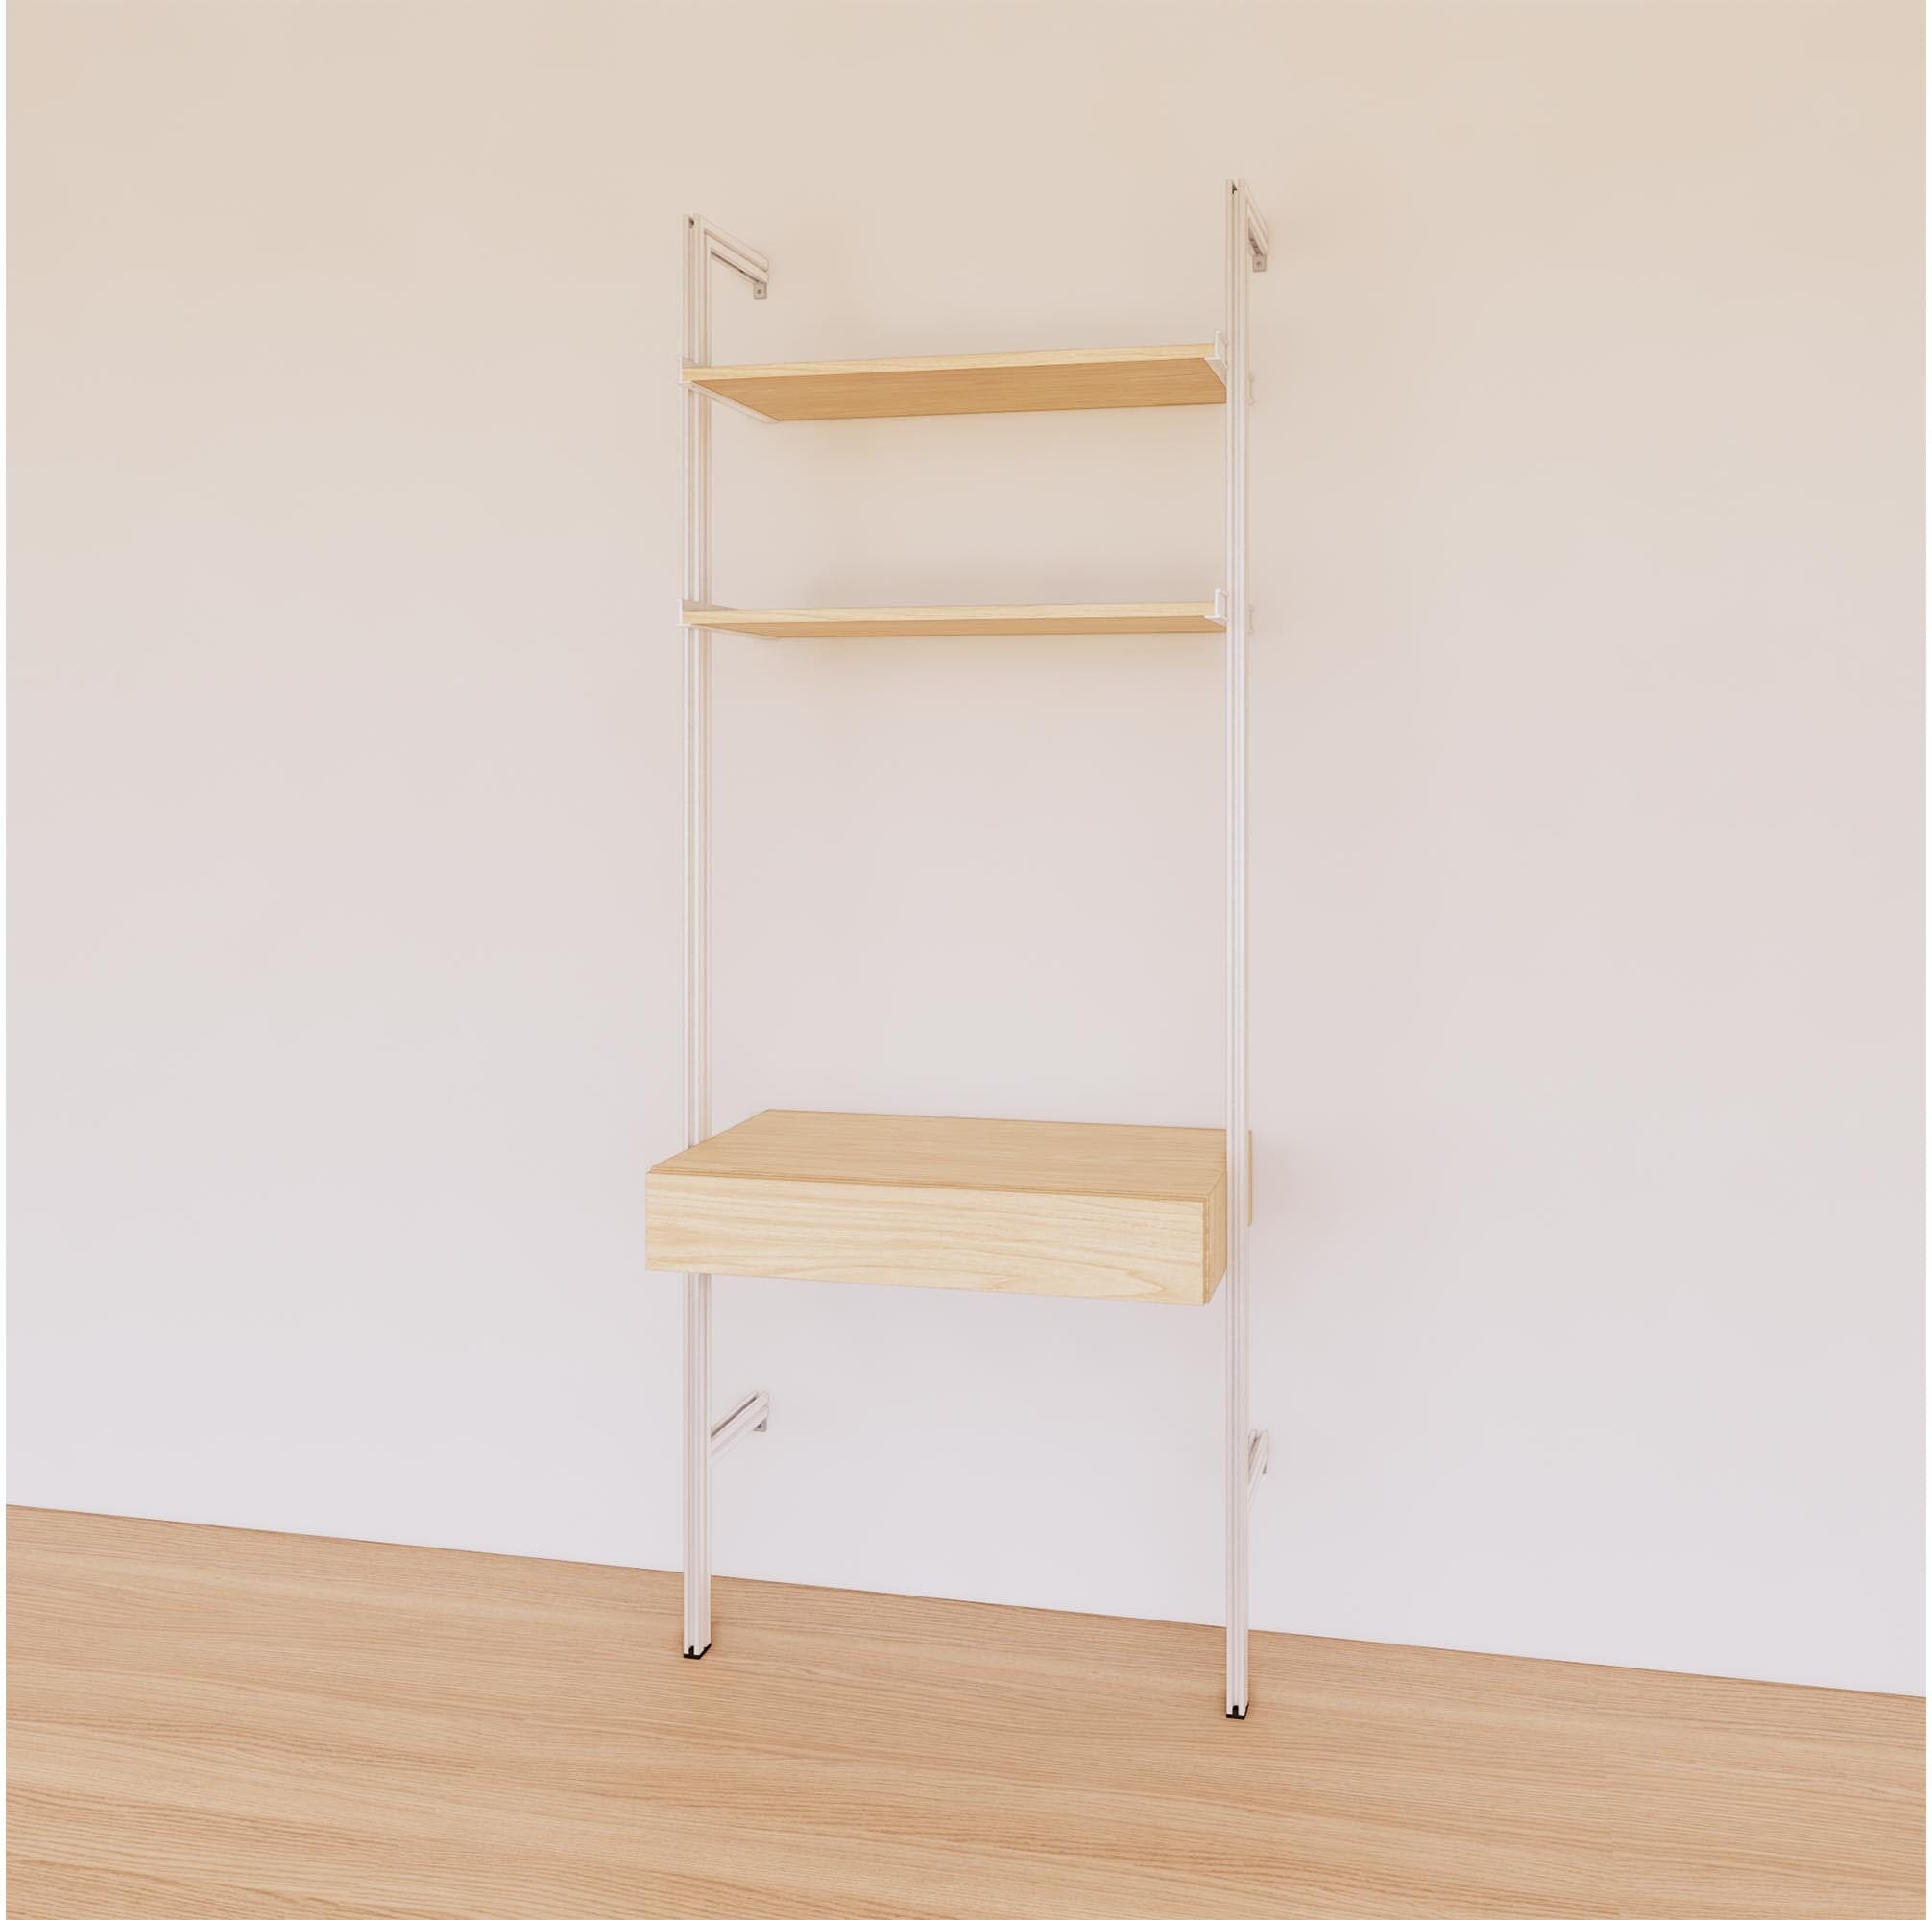 31" Desk Option with Shelves